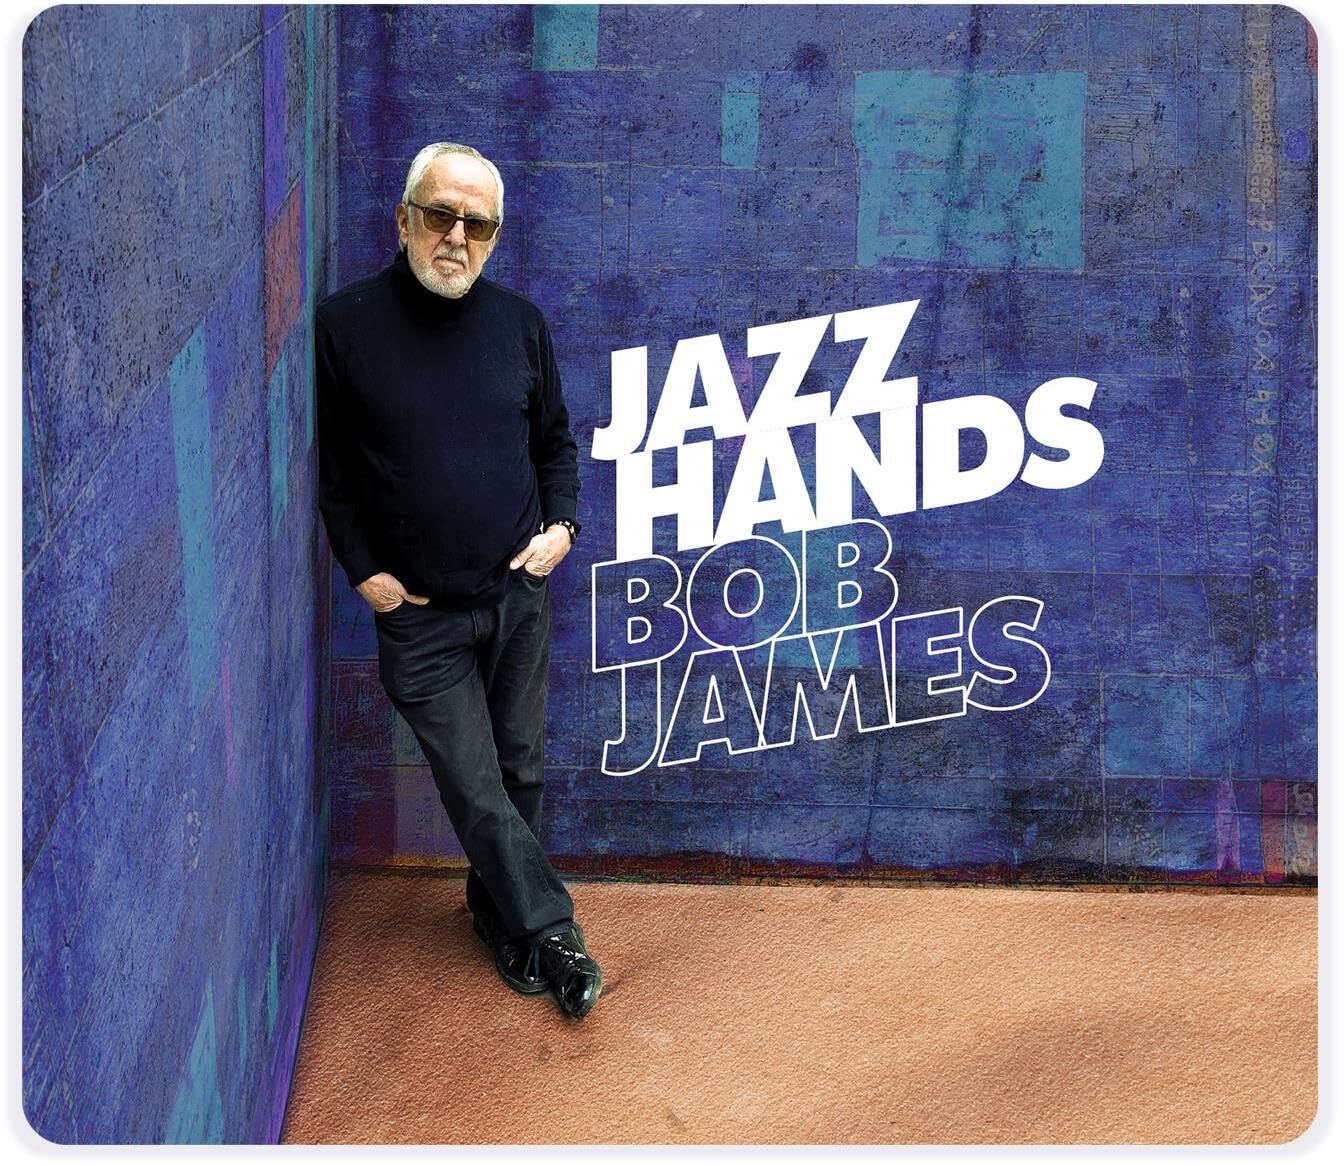 BOB JAMES - Jazz Hands cover 